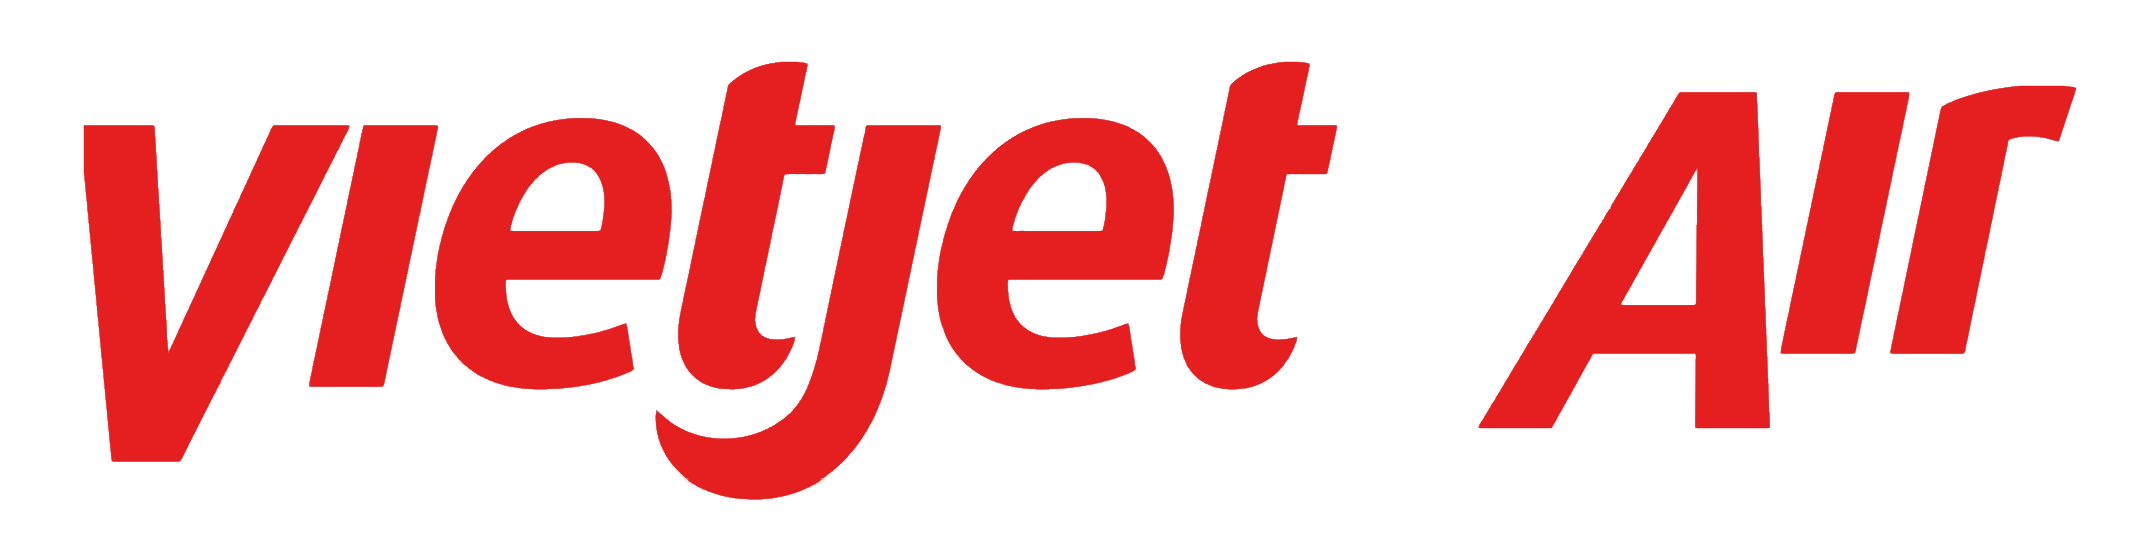 Vietjet Air logo, logotype